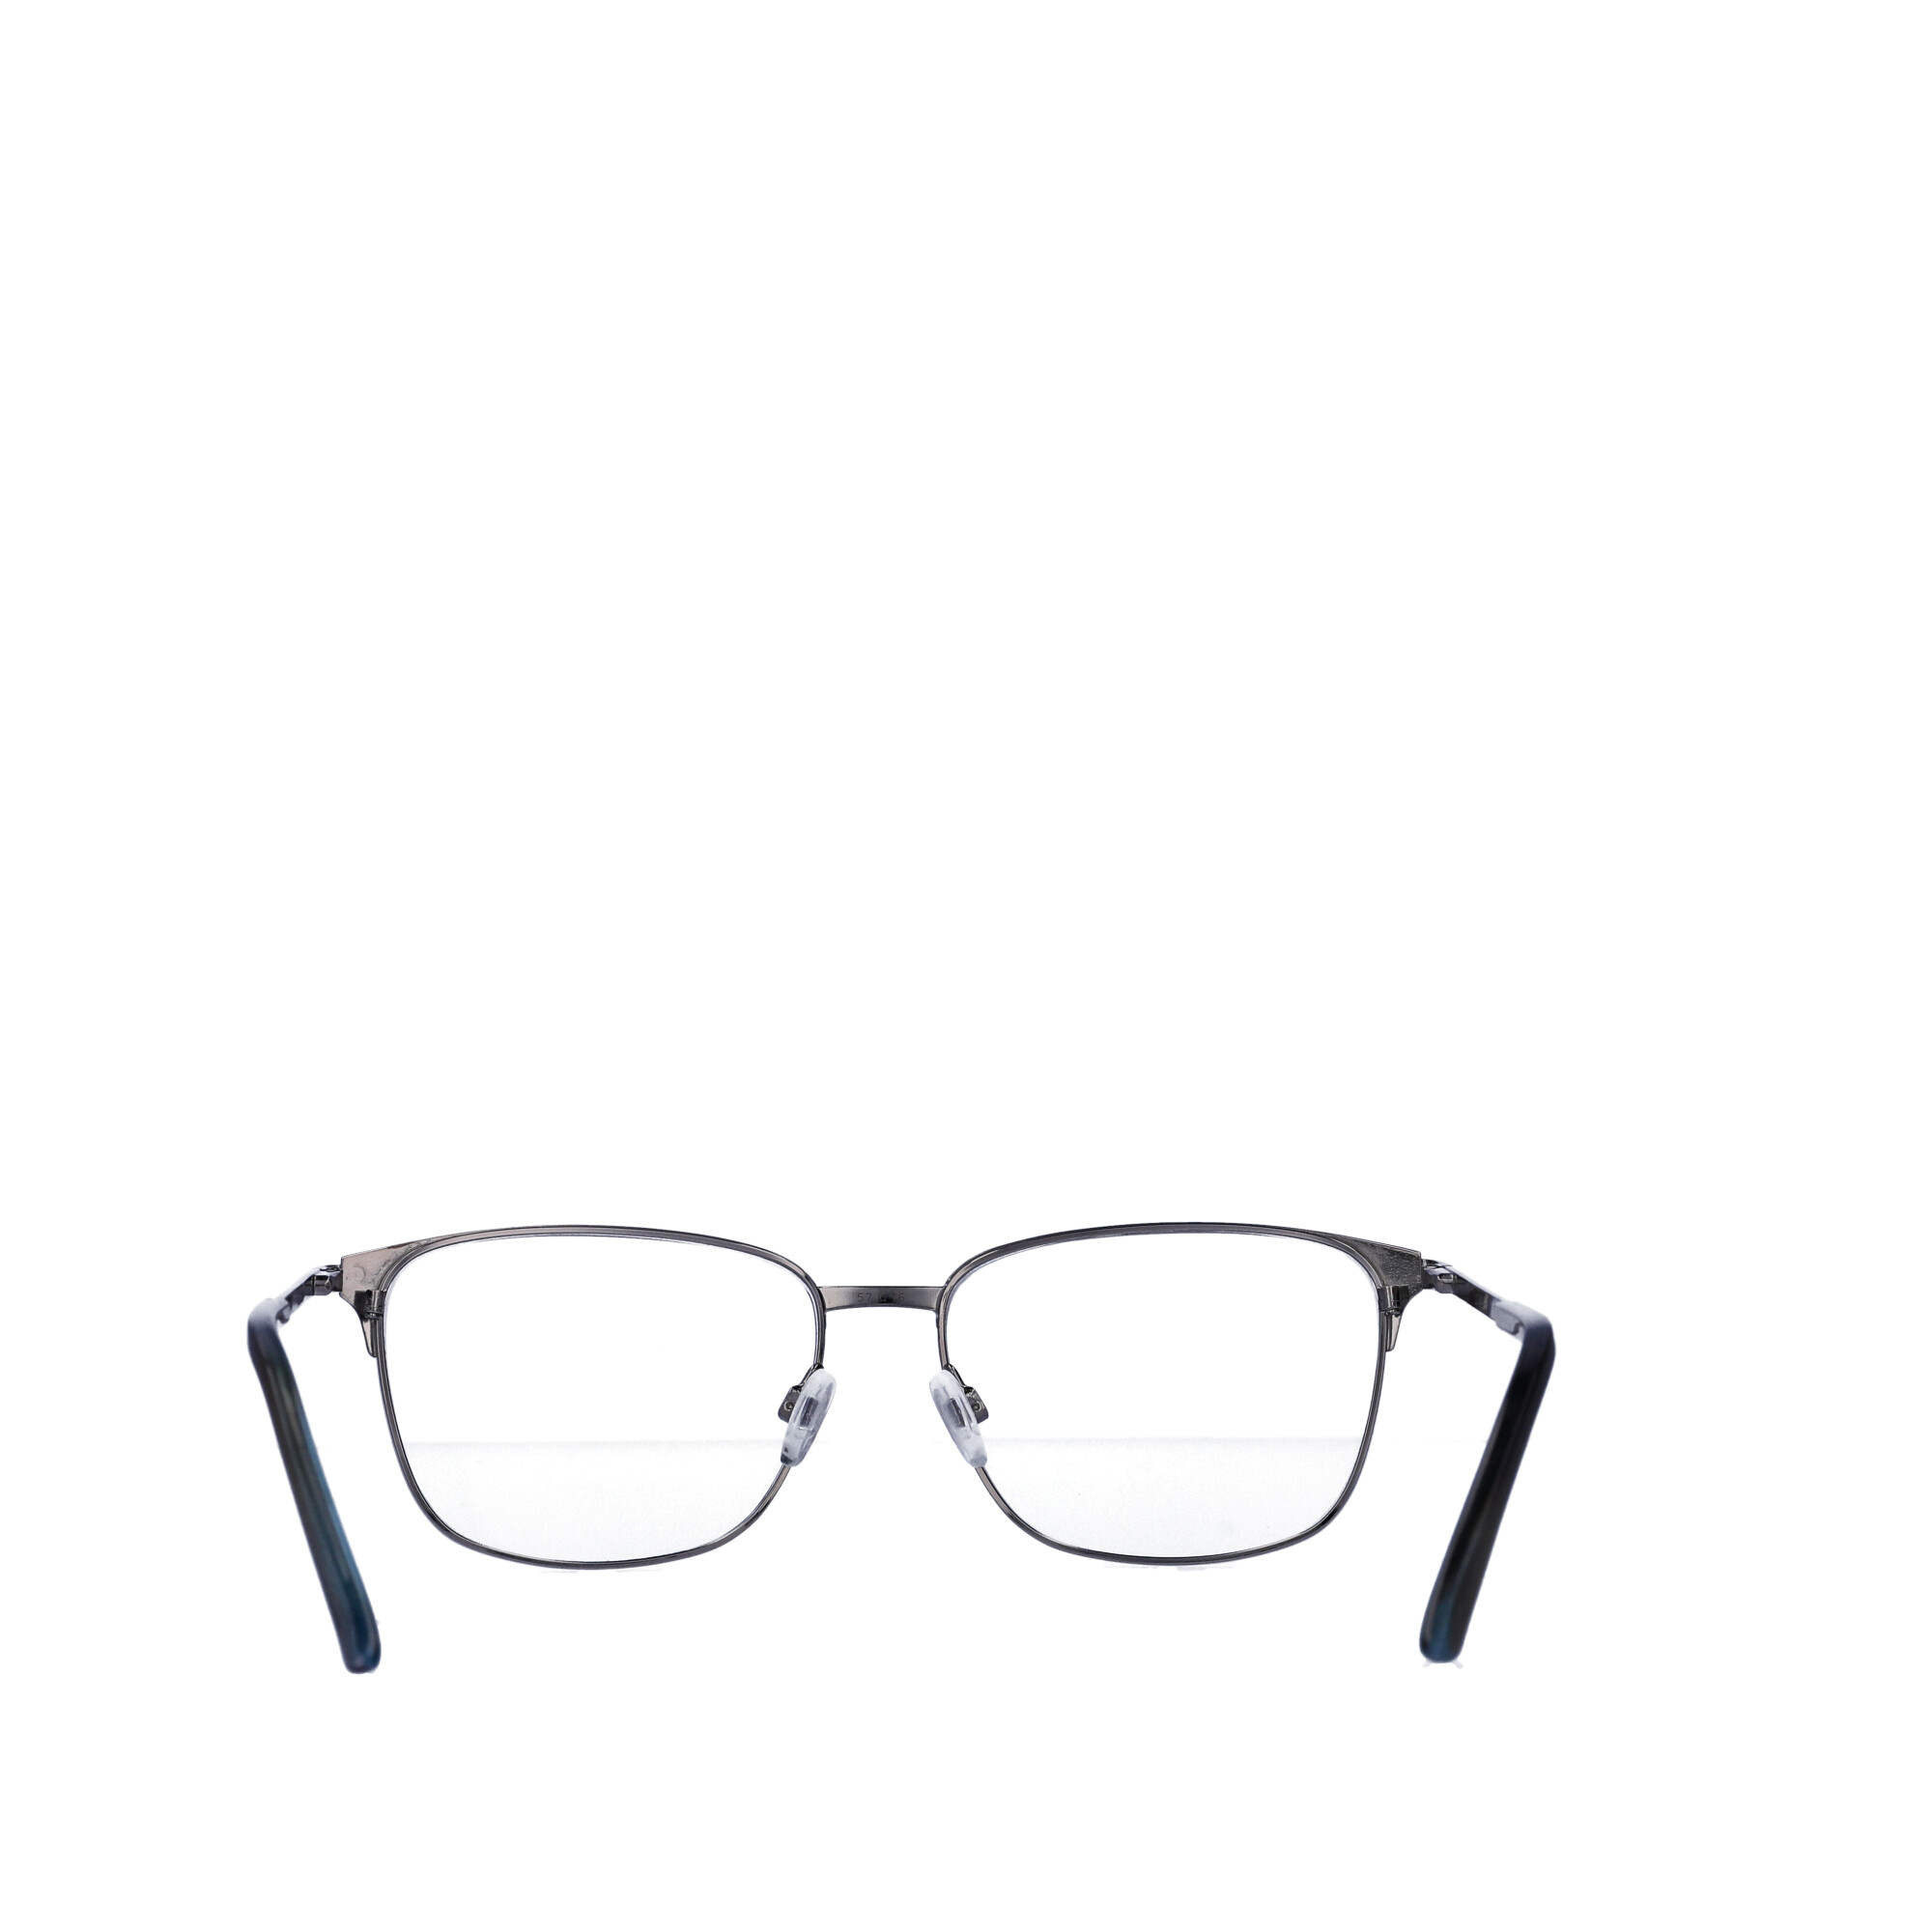 Walmart Men's Rx'able Eyeglasses, Mop44, Black Silver, 57-16-150 - image 3 of 13